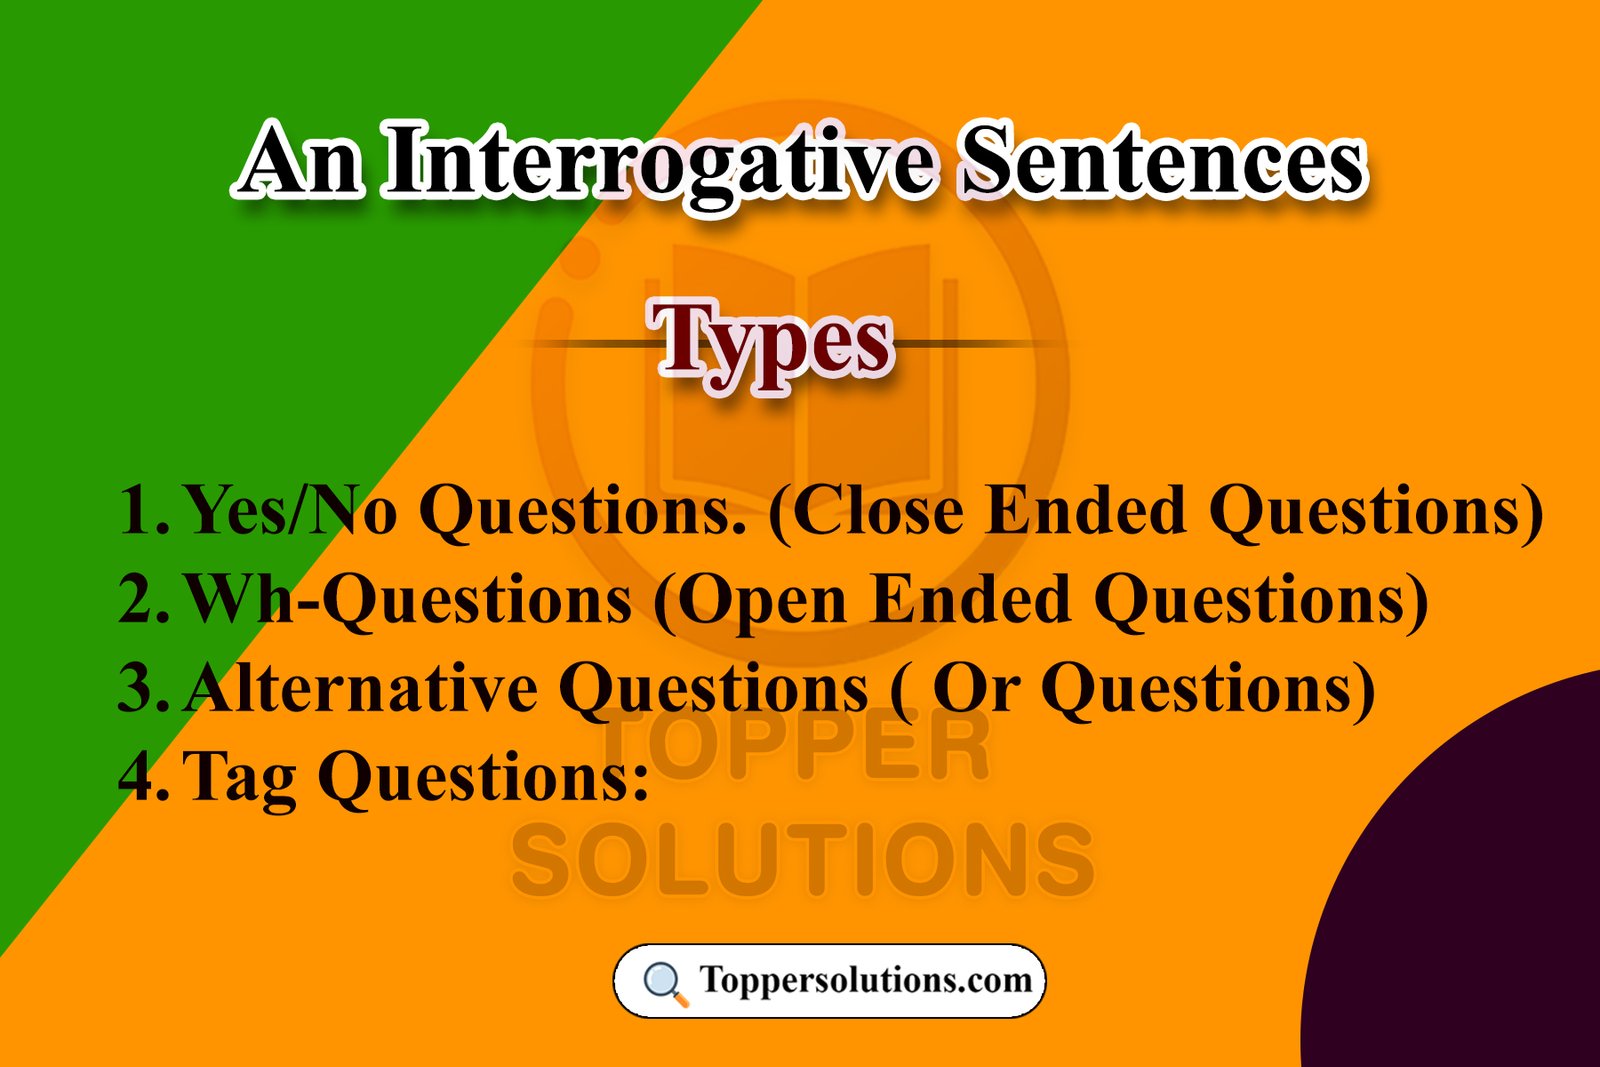 Interrogative sentence